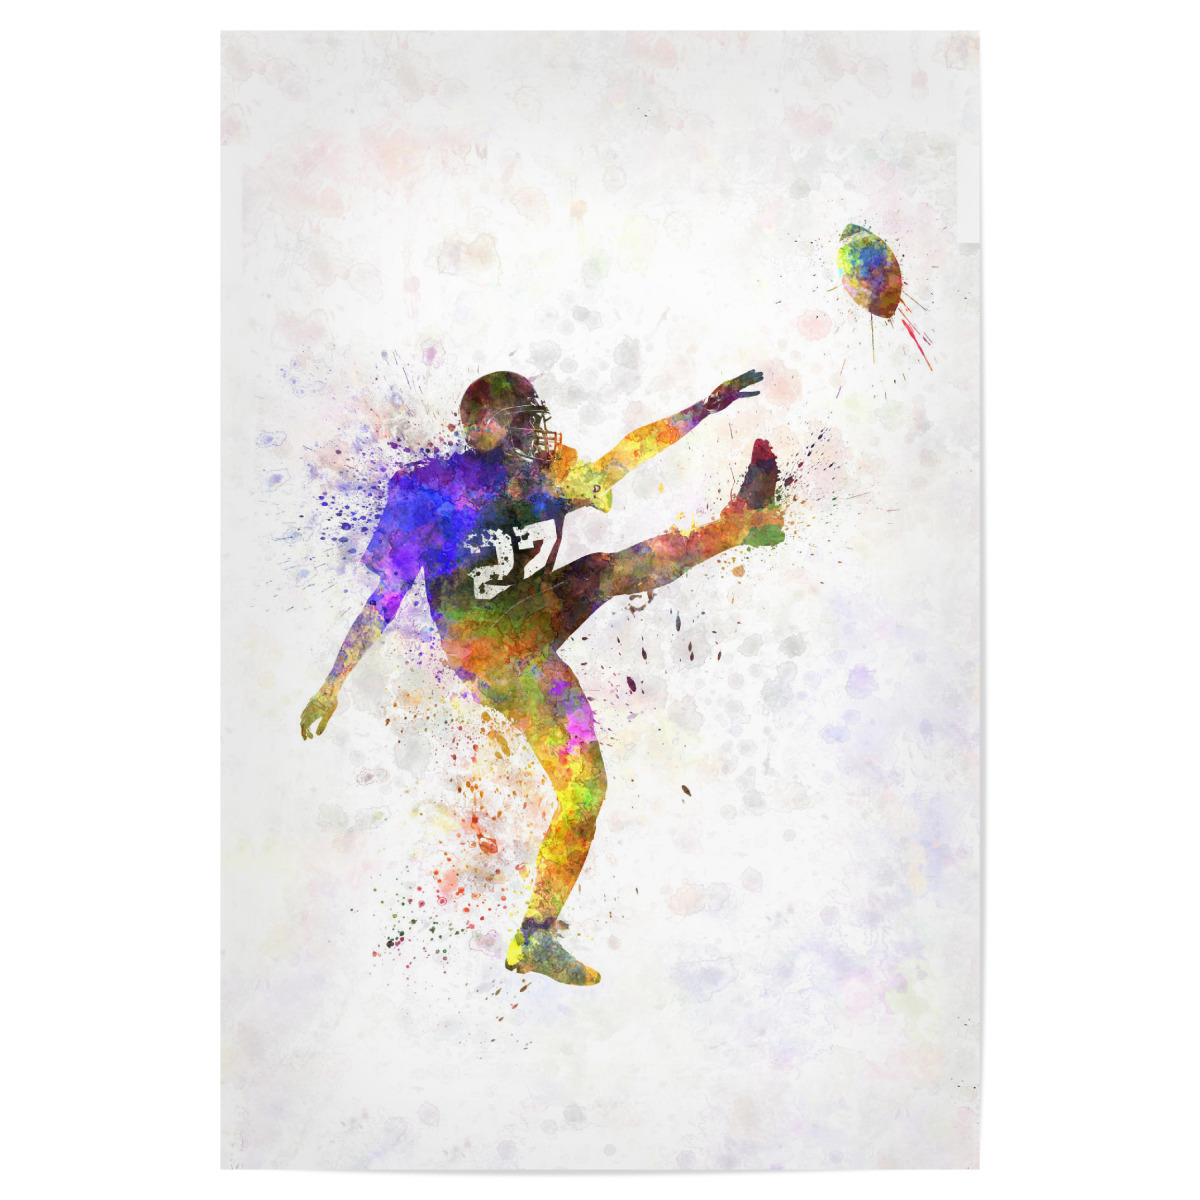 American football kicker kicking als Poster bei artboxONE kaufen